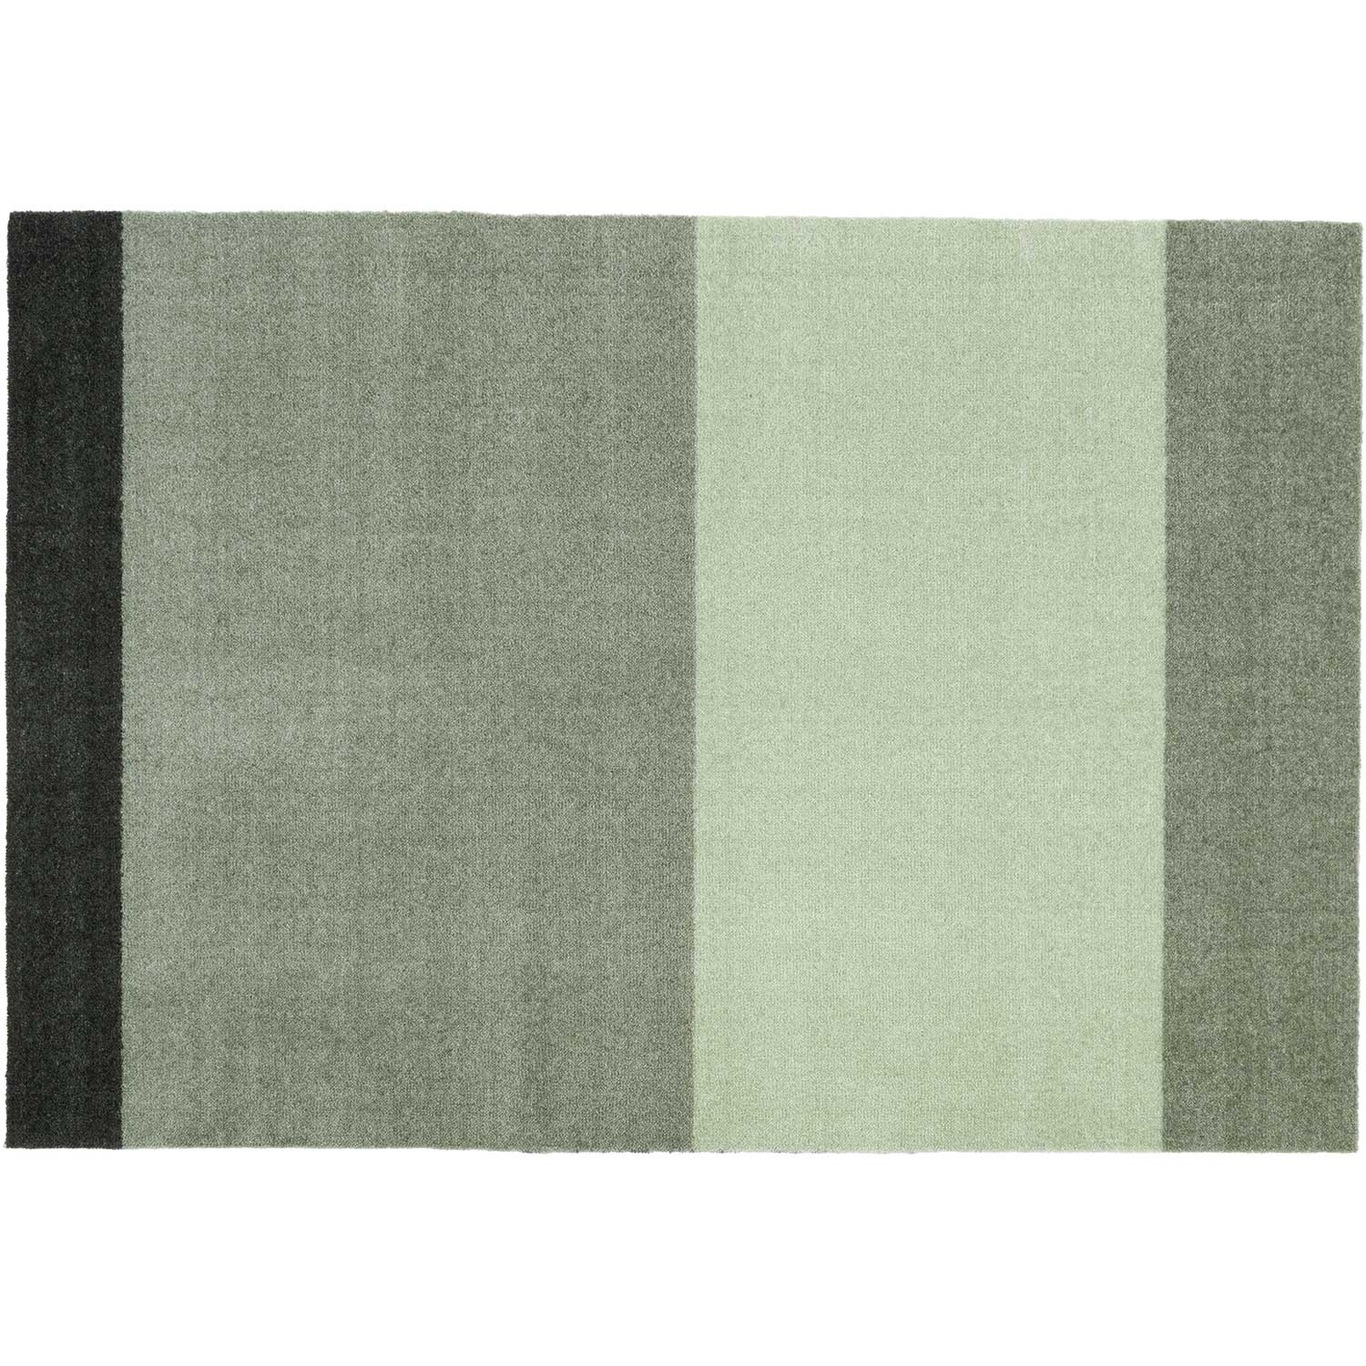 Stripes Rug Light Green / Dark Green, 90x130 cm